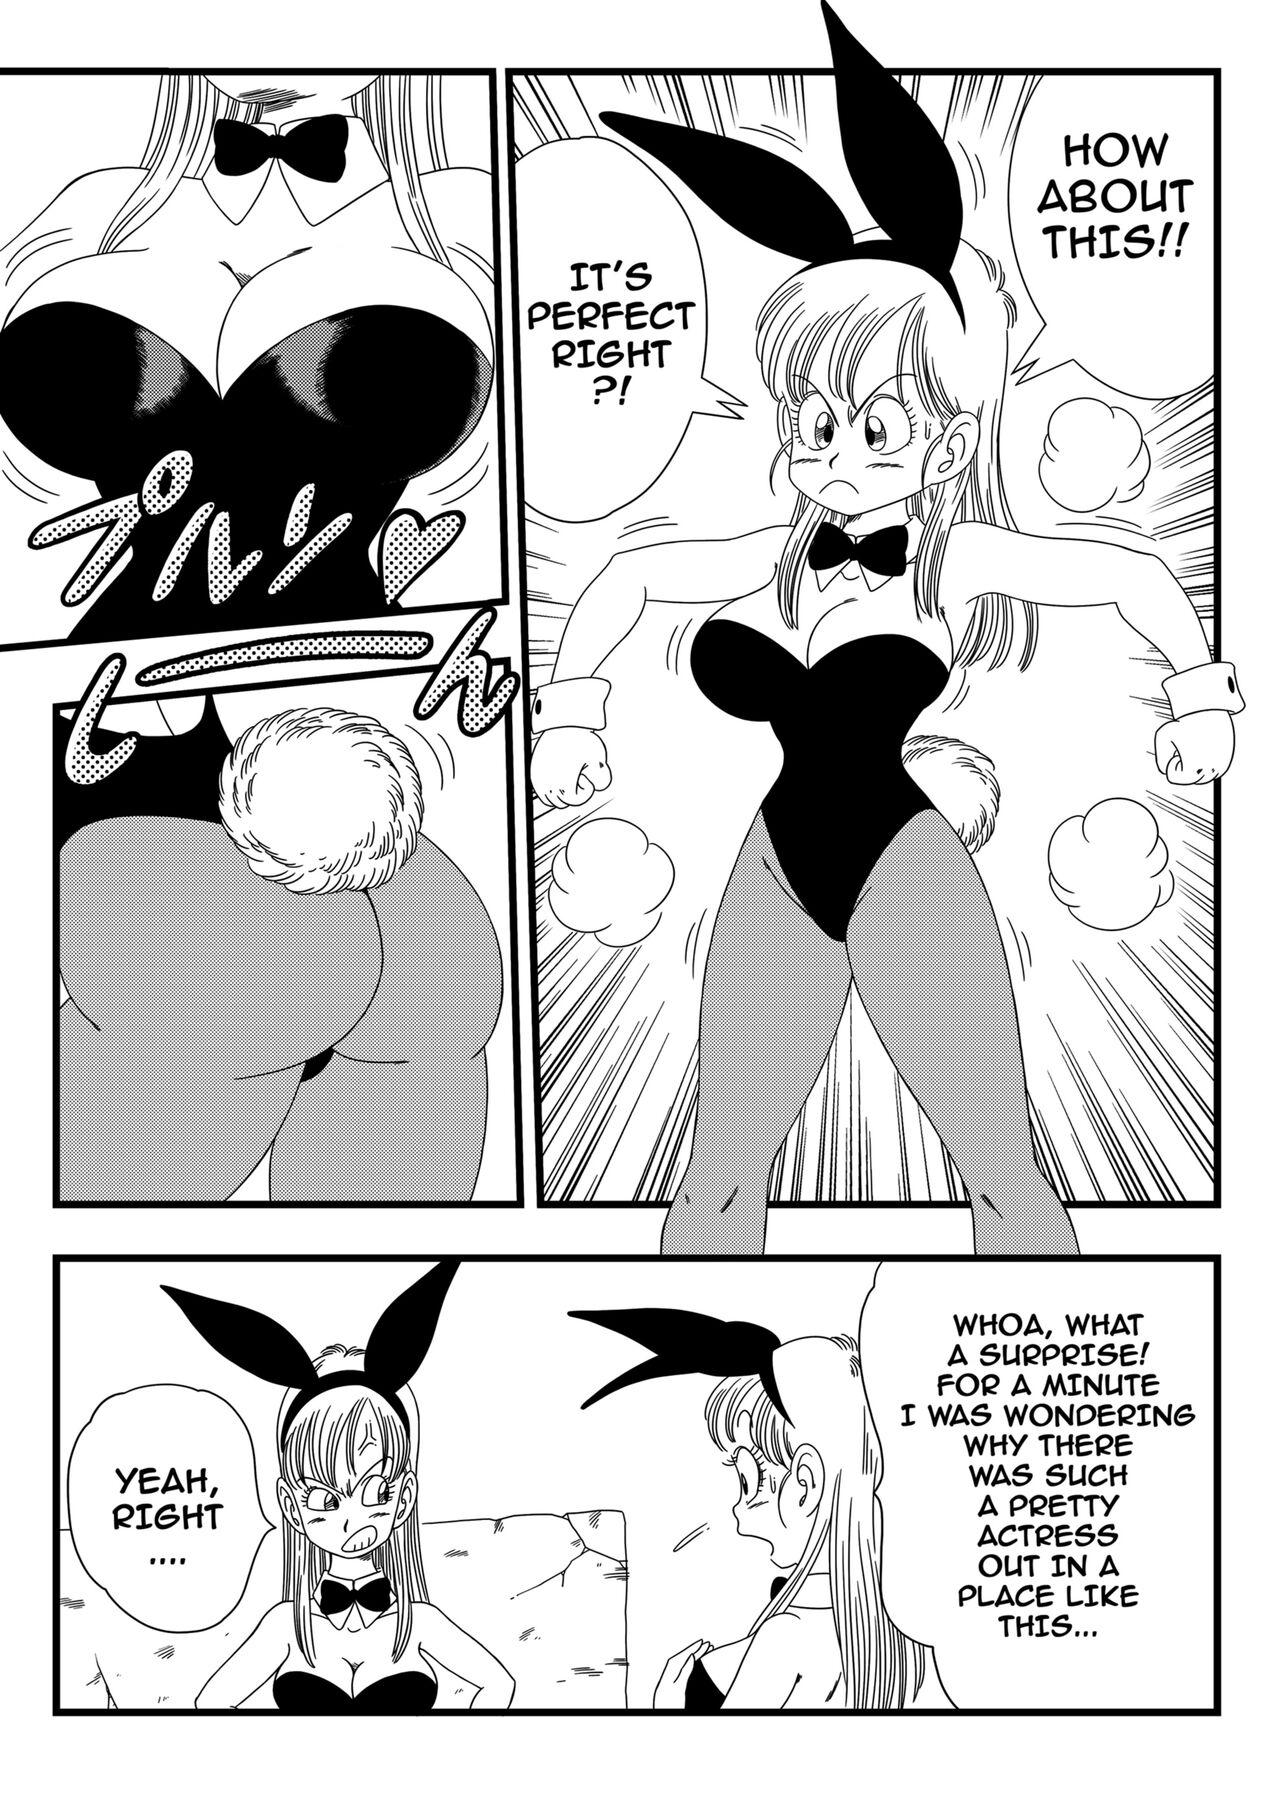 Bunny Girl Transformation 4